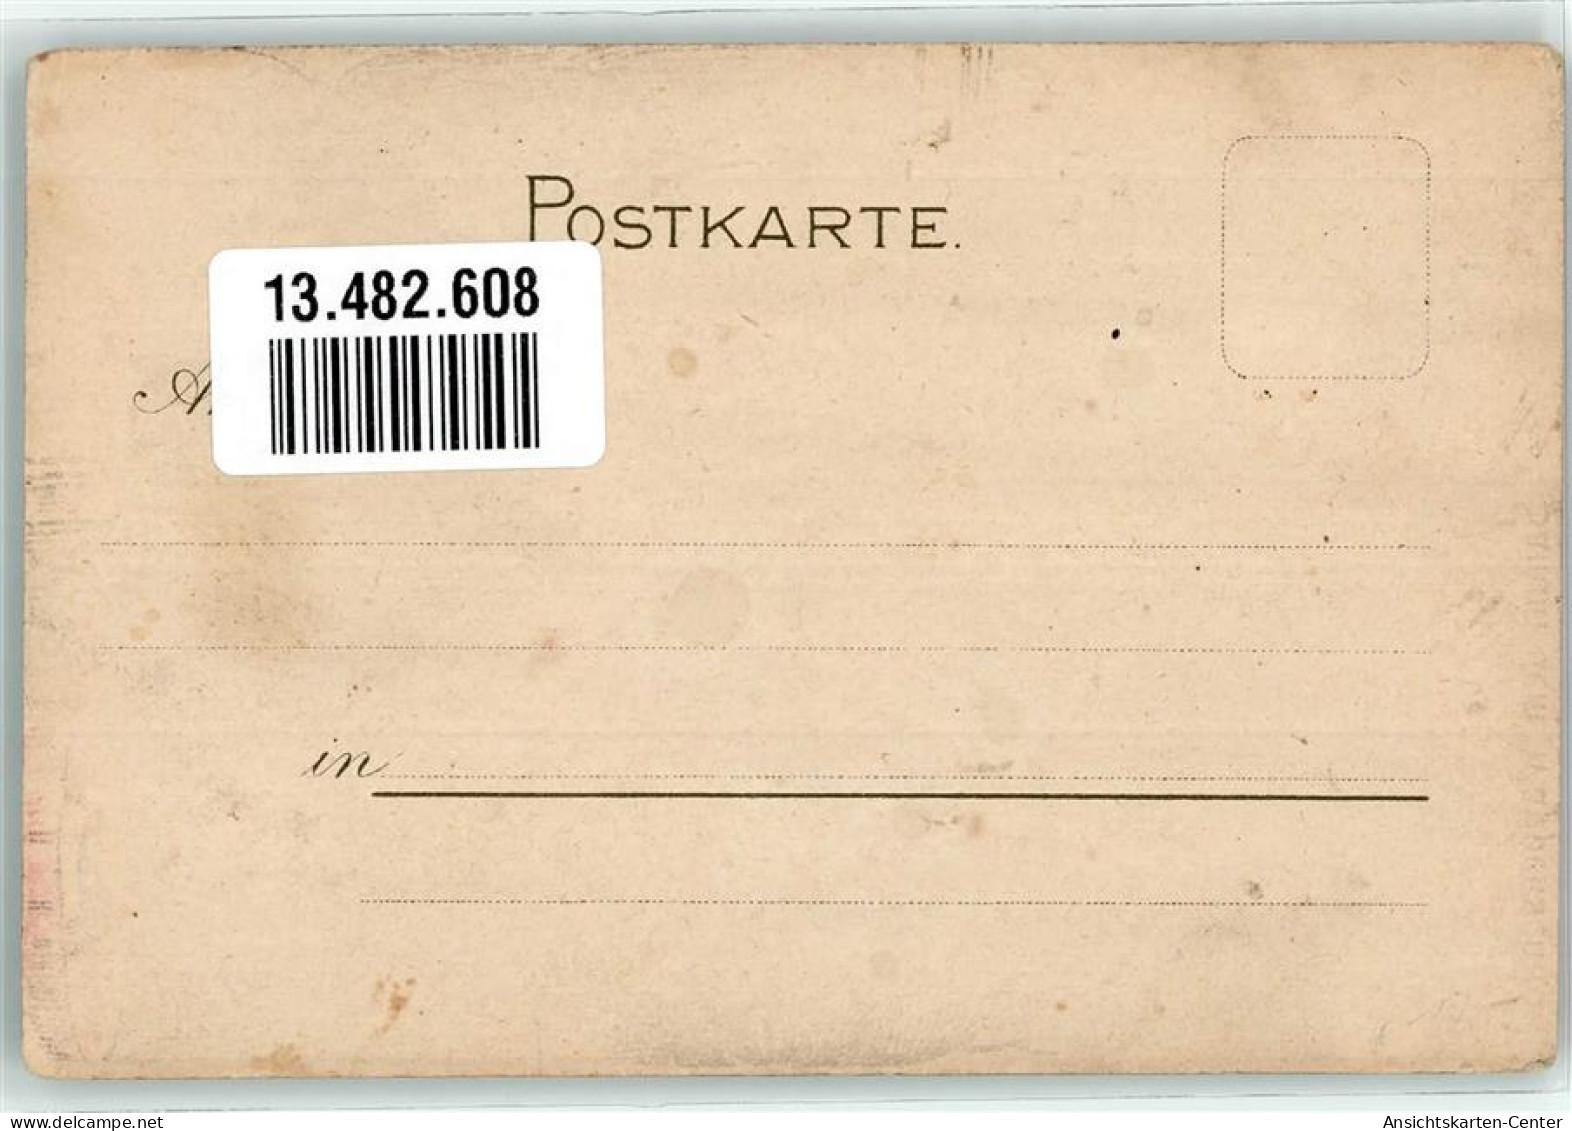 13482608 - Spiegel Esel - Postal Services